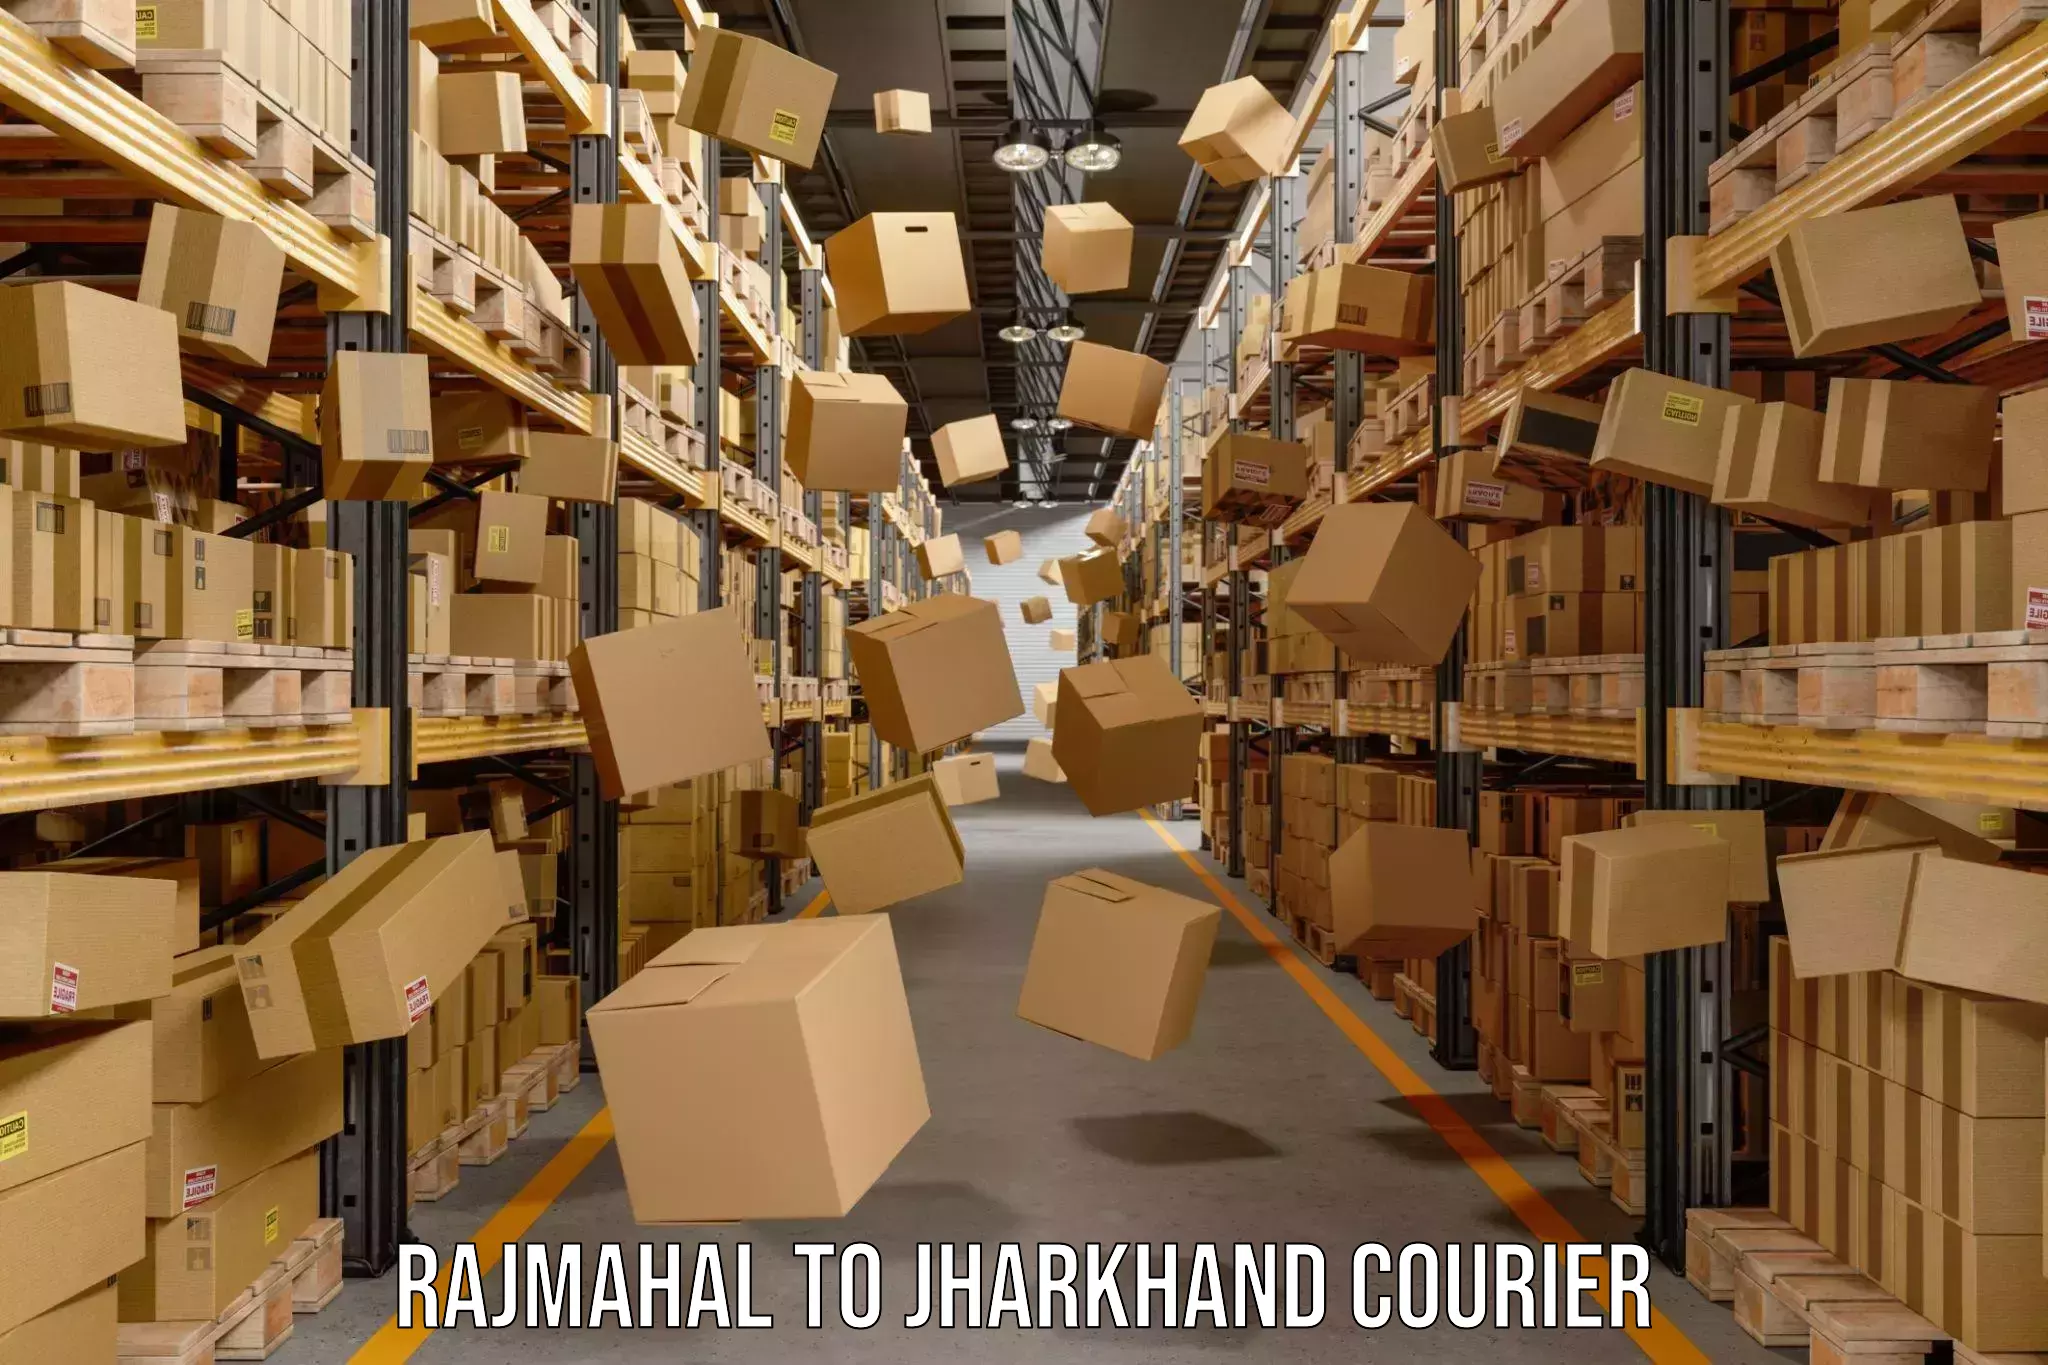 Courier service innovation Rajmahal to Hazaribagh